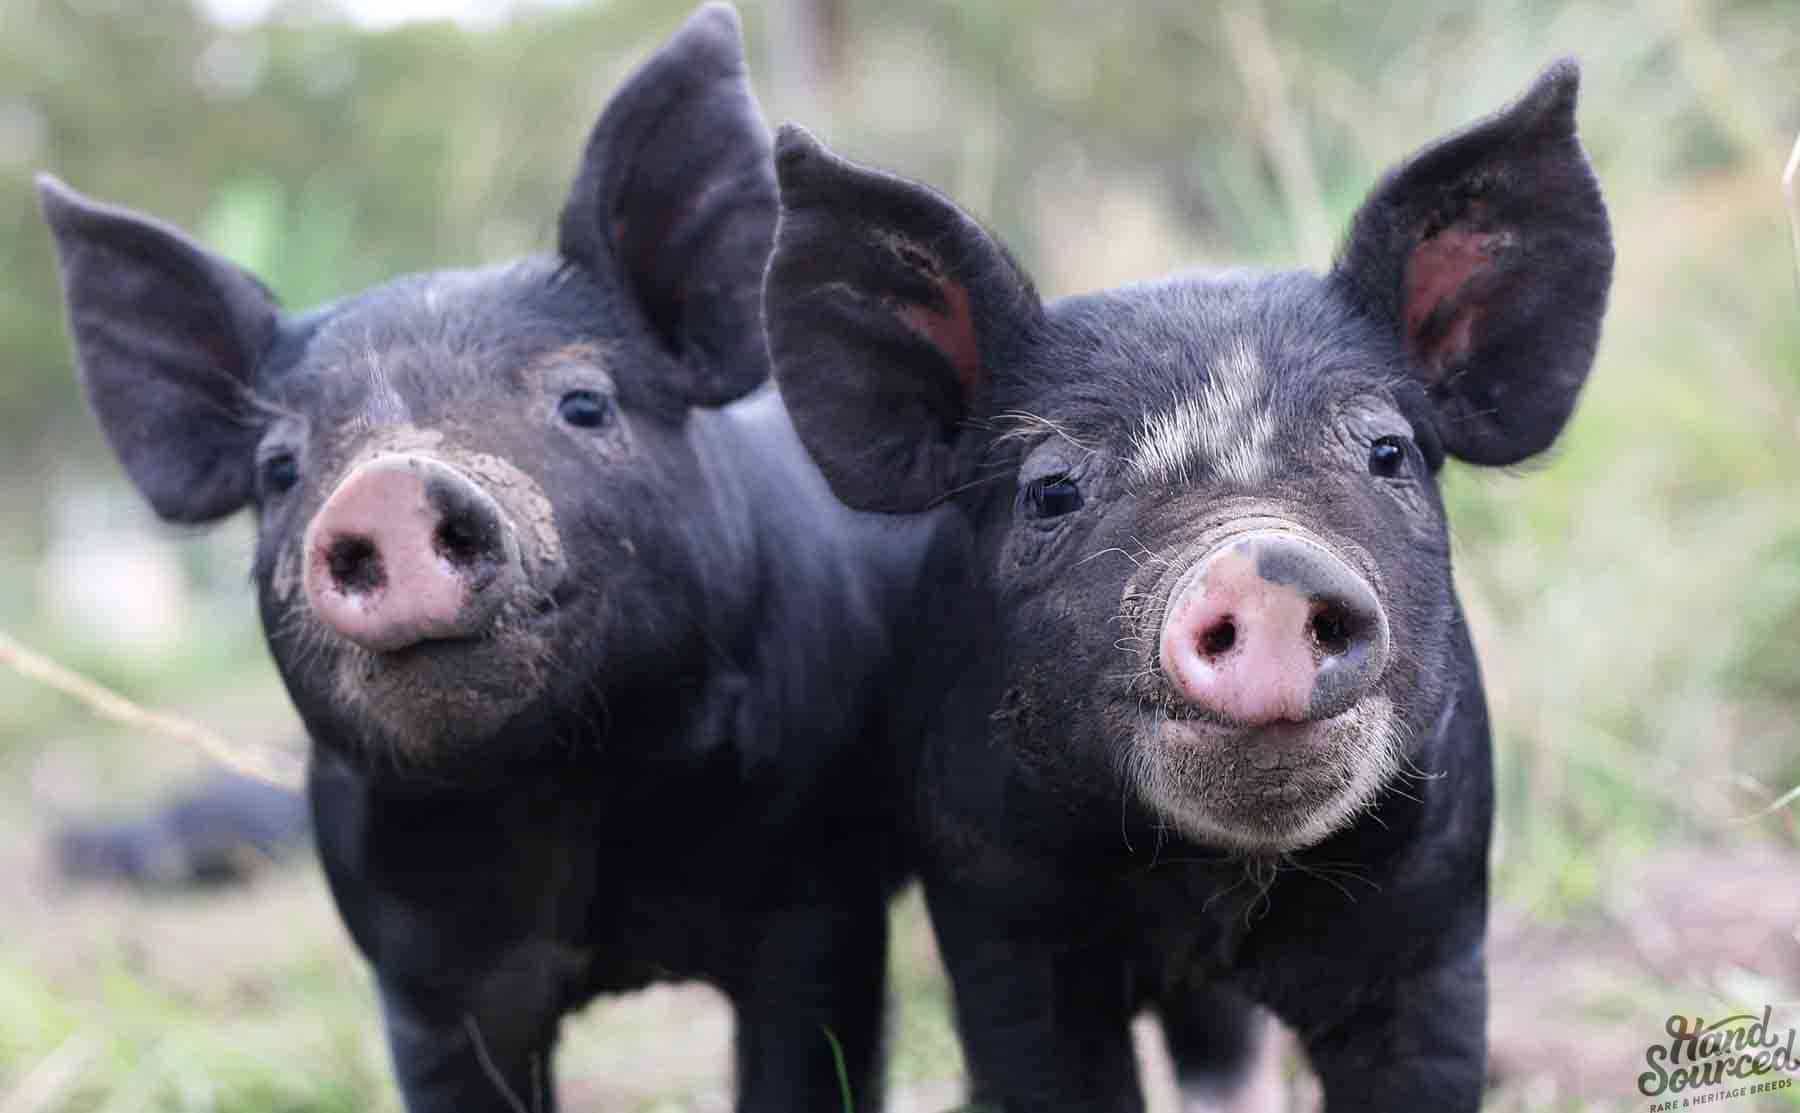 Black Pigs